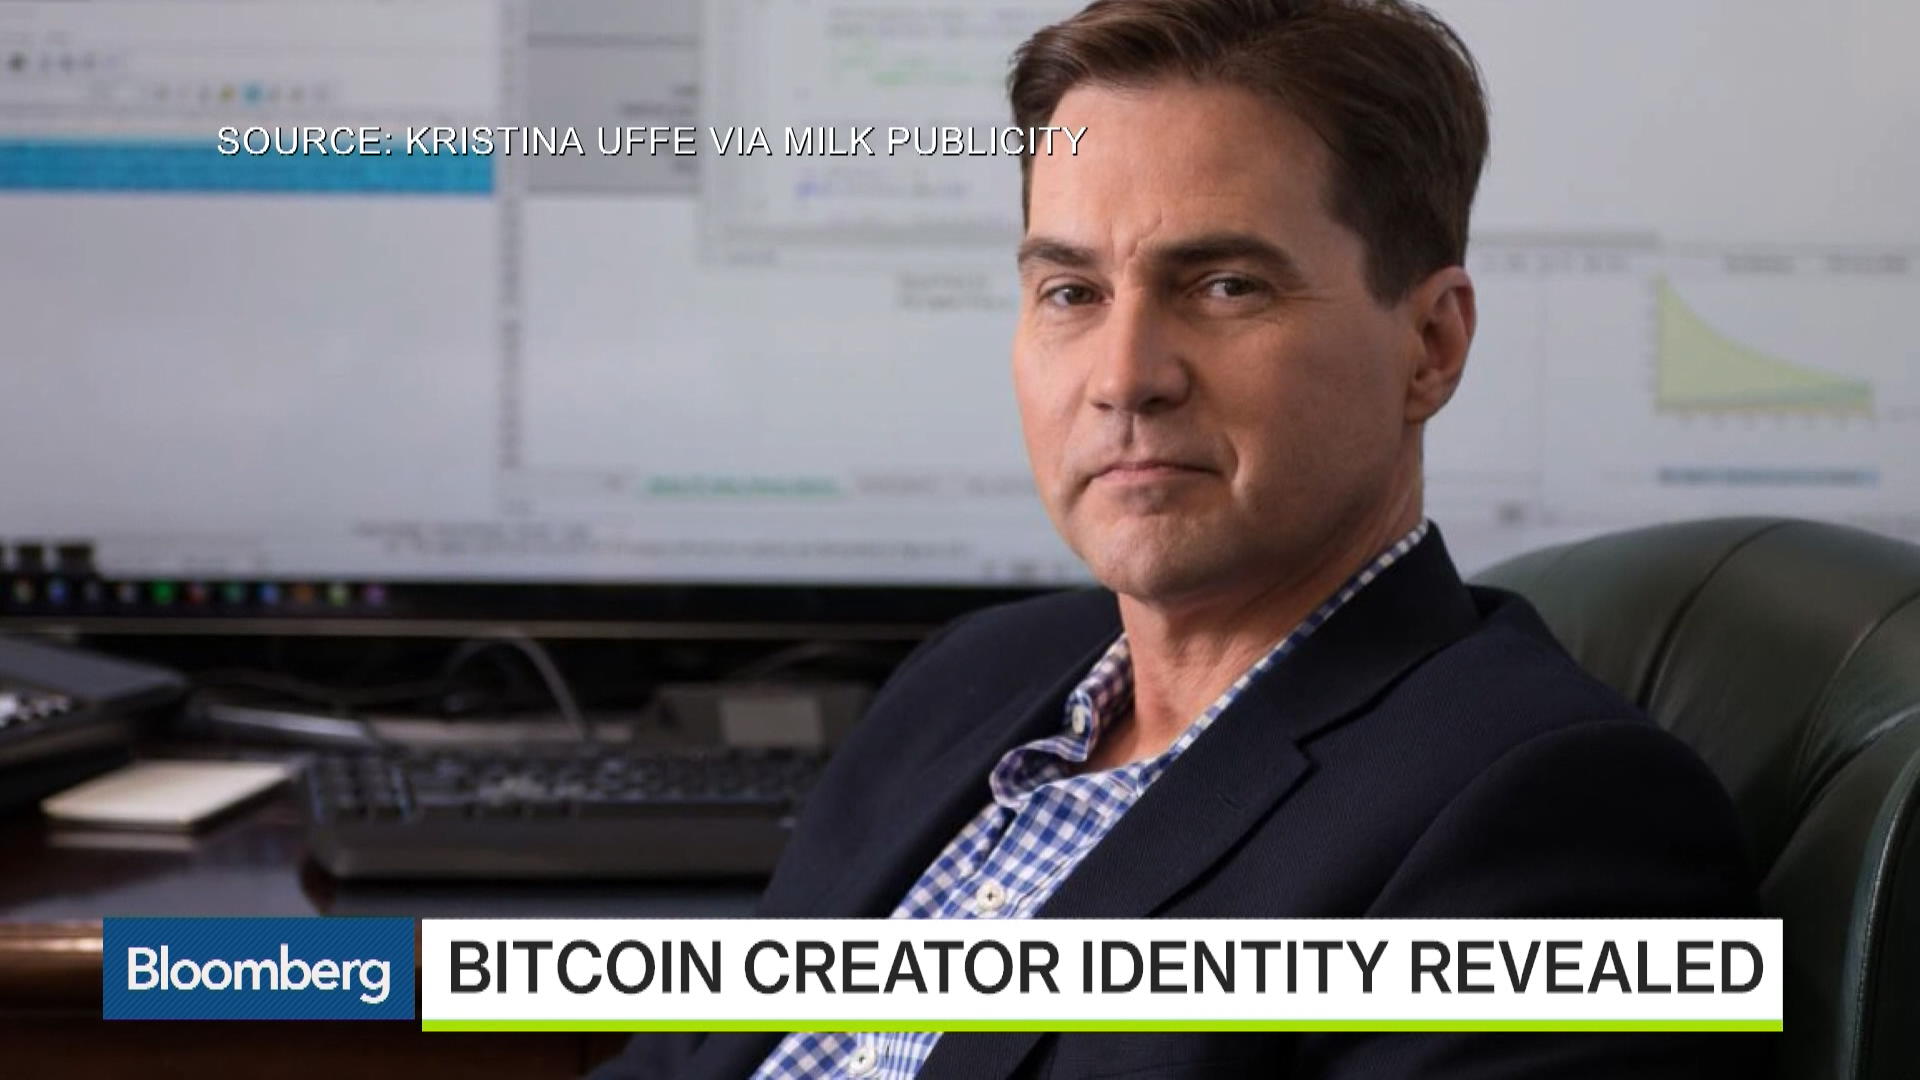 who is the bitcoin creator